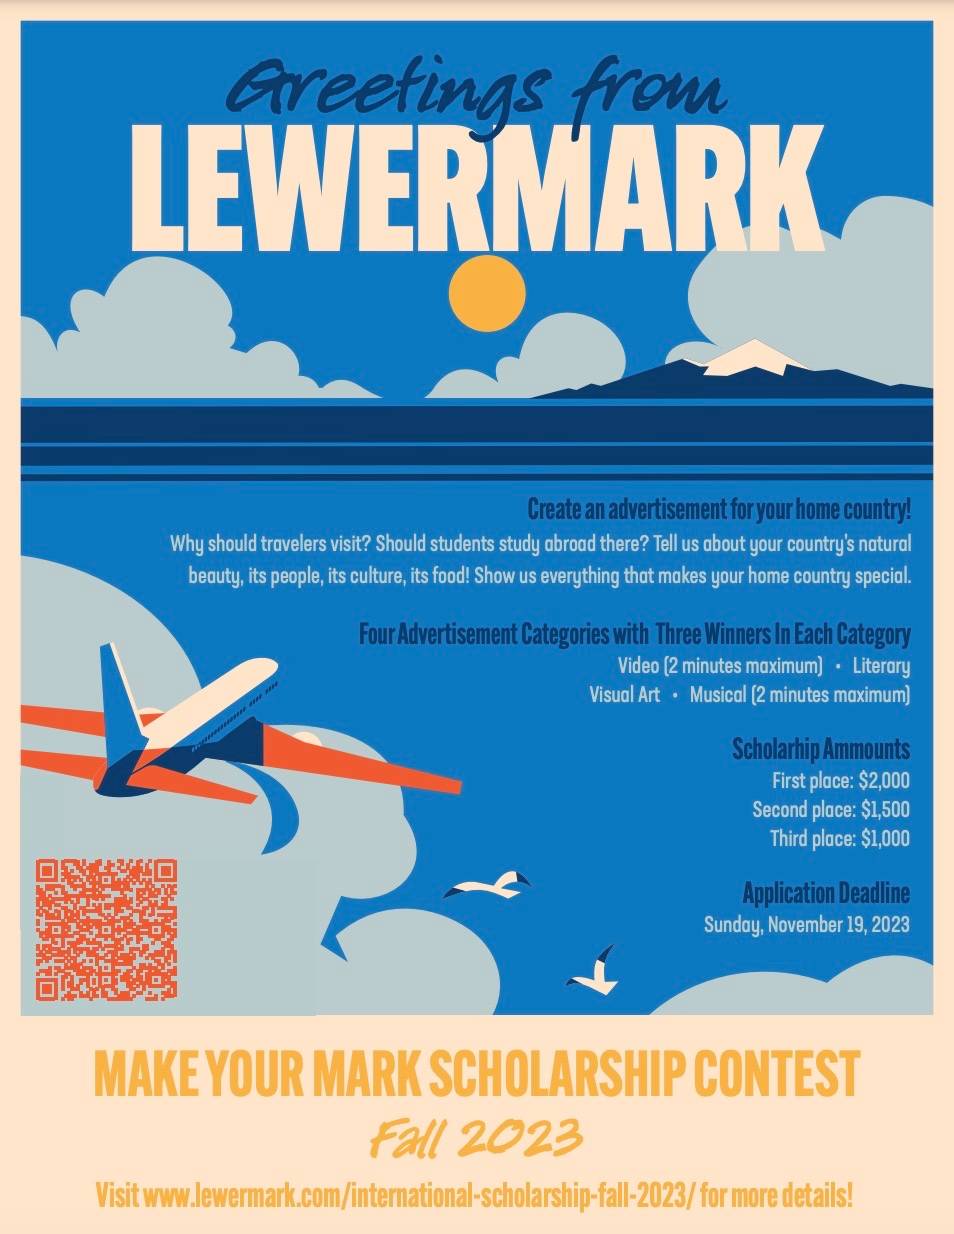 LewerMark's Make Your Mark Scholarship Contest